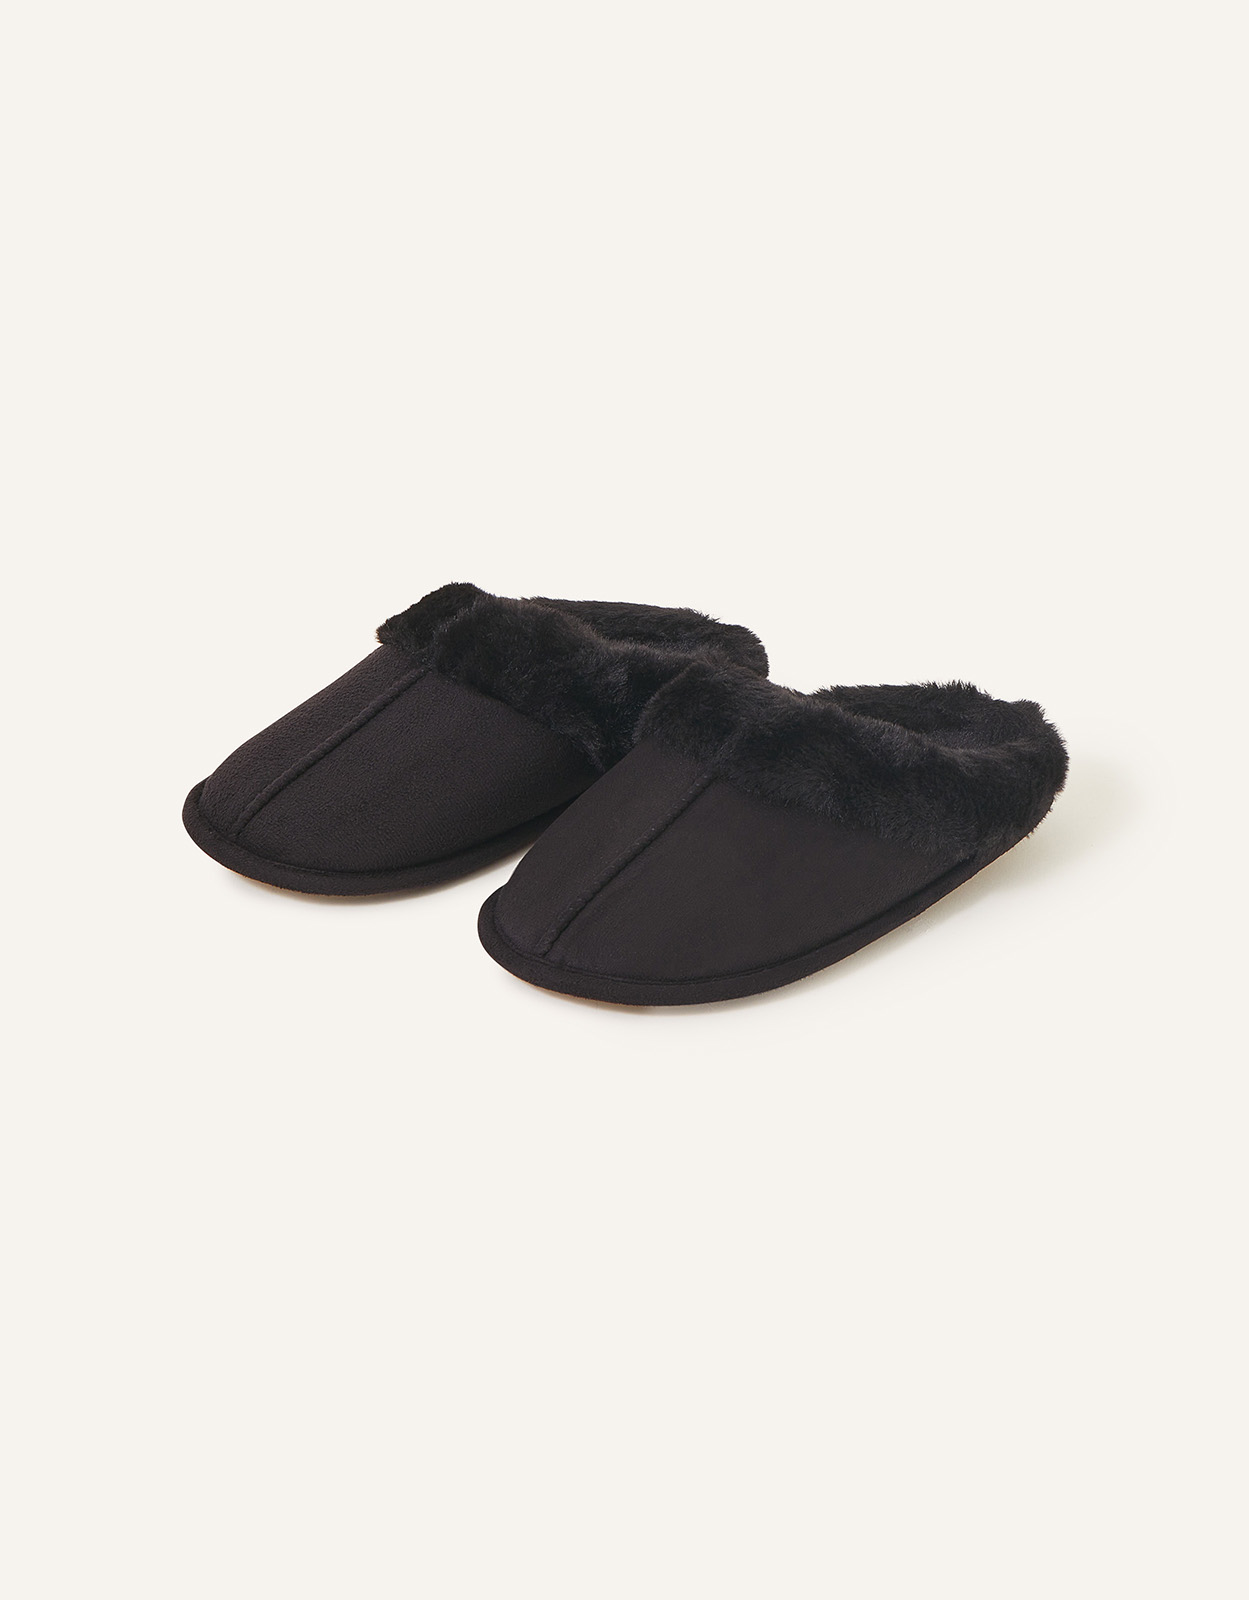 Accessorize Women's Faux Fur Mule Slippers Black, Size: XL